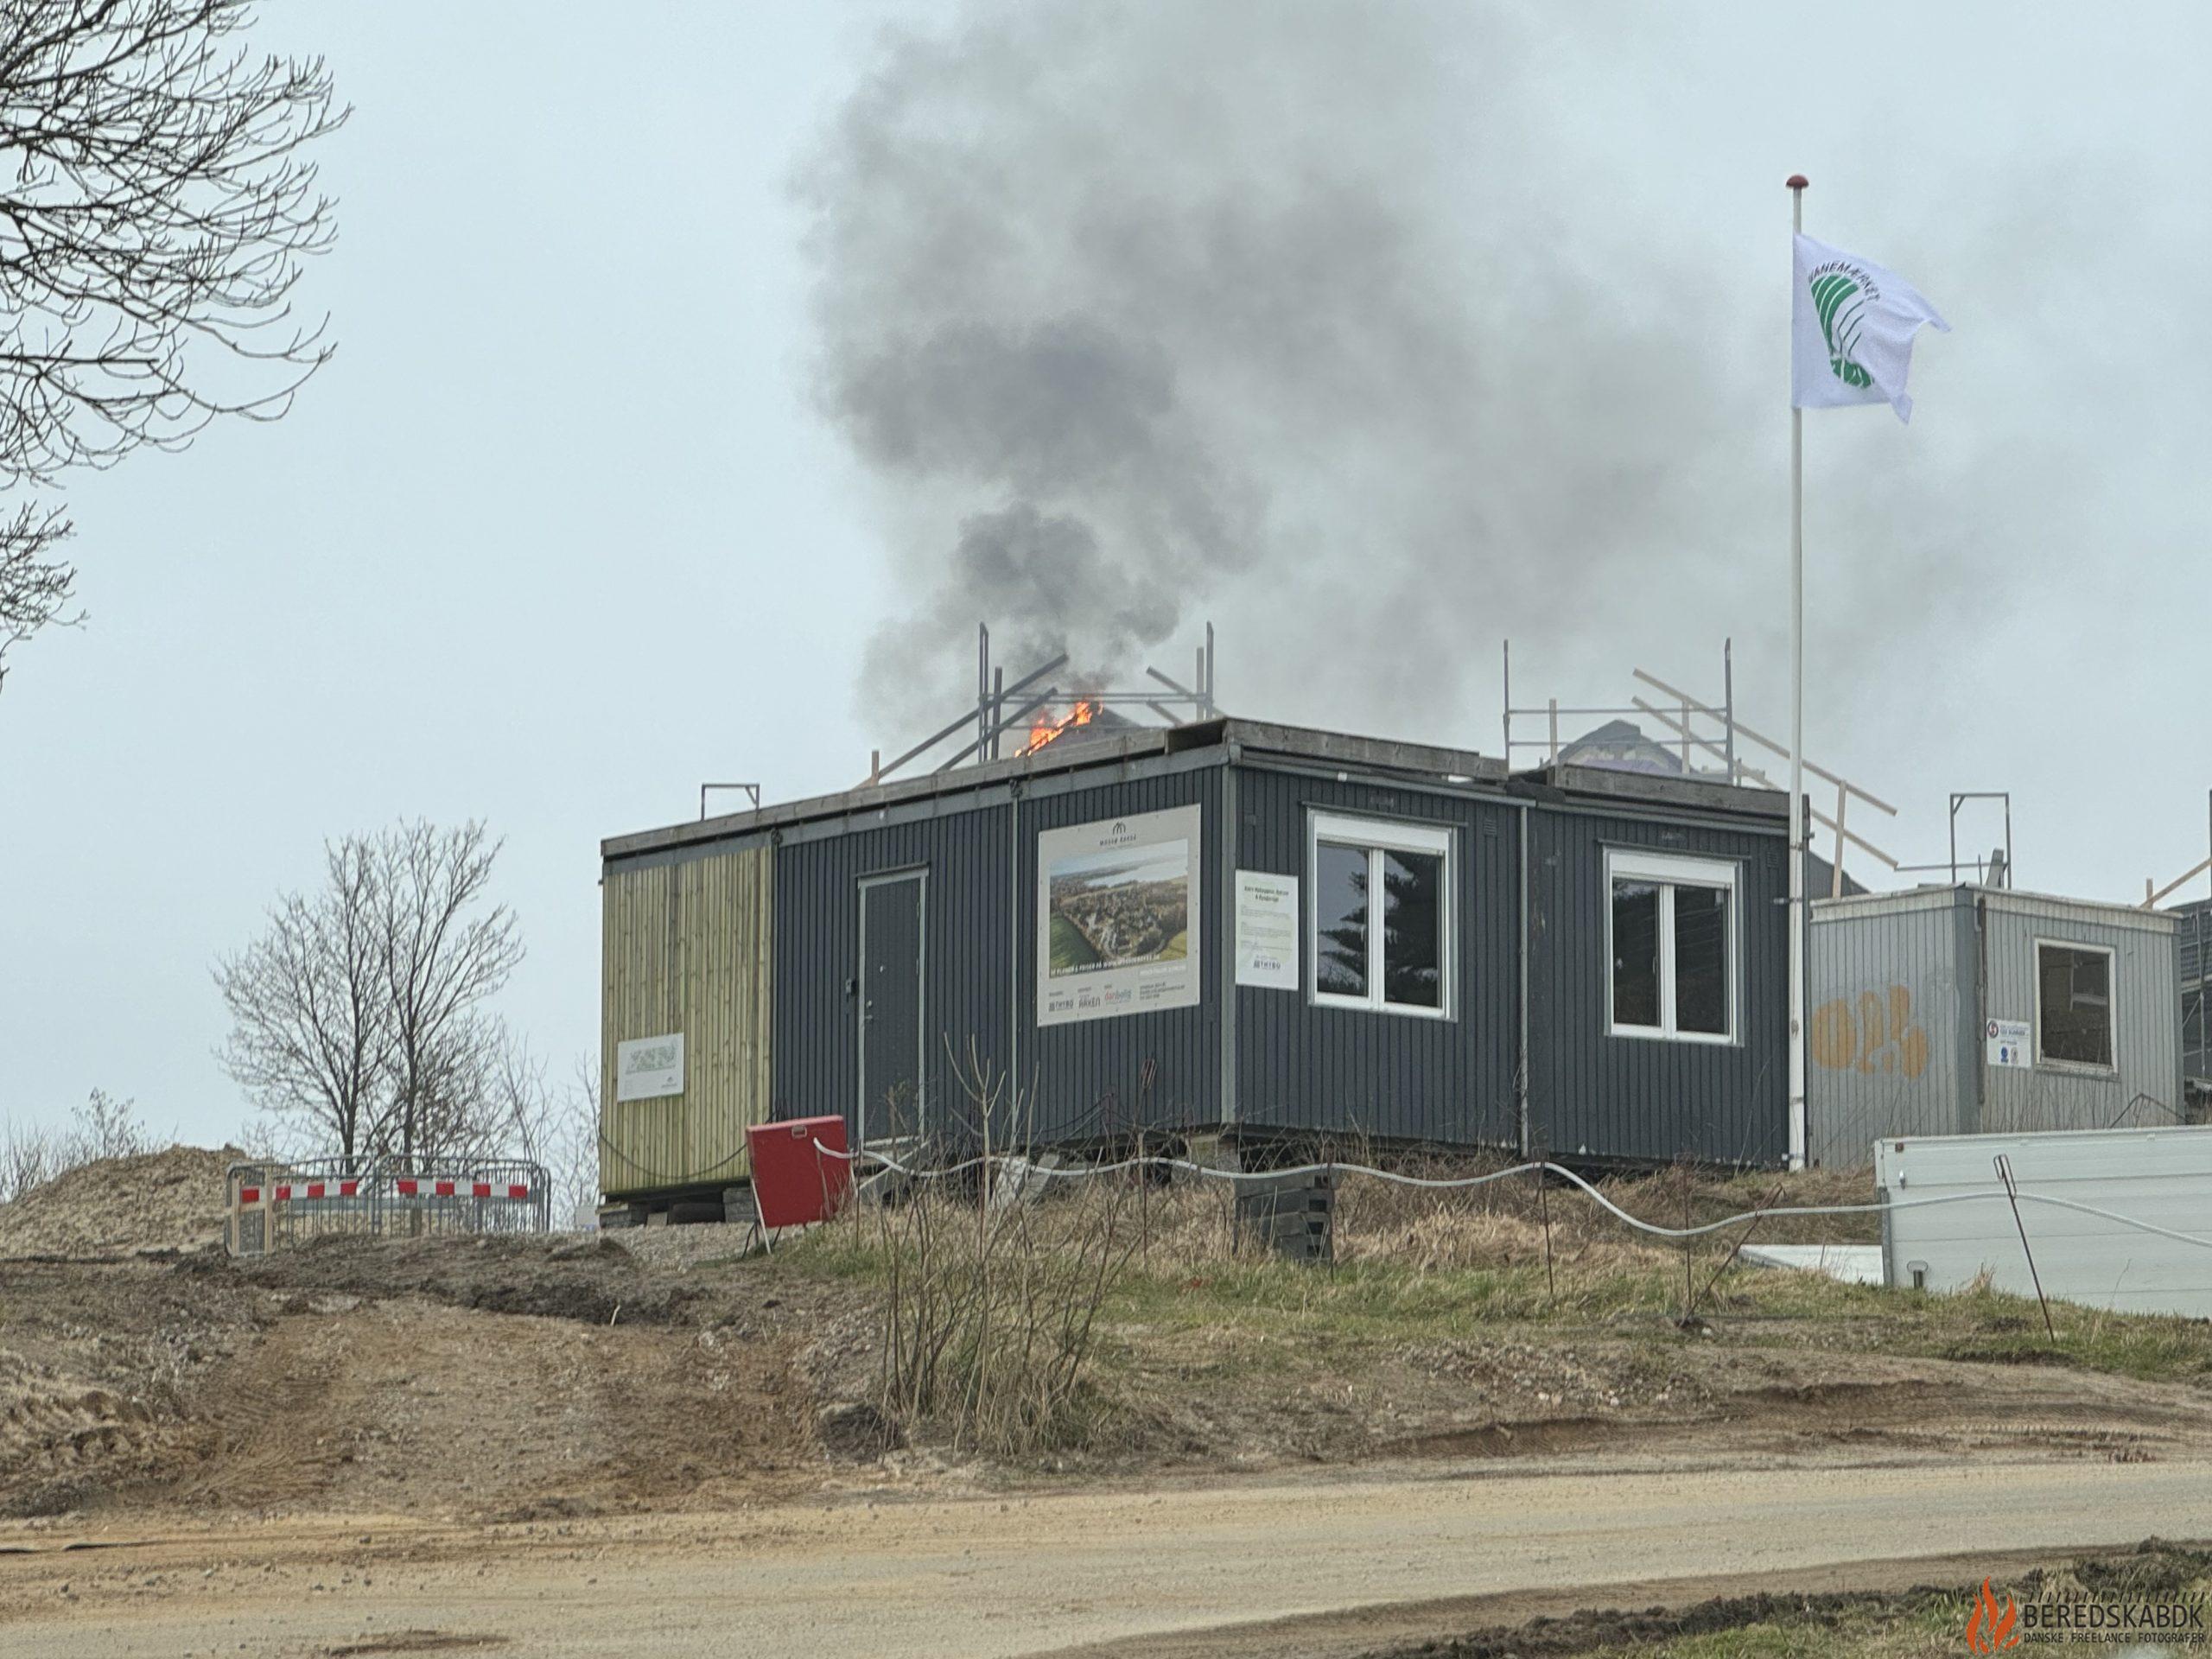 12/03-24 Skanderborg: Brand i bygning bag skurvogn i Alken